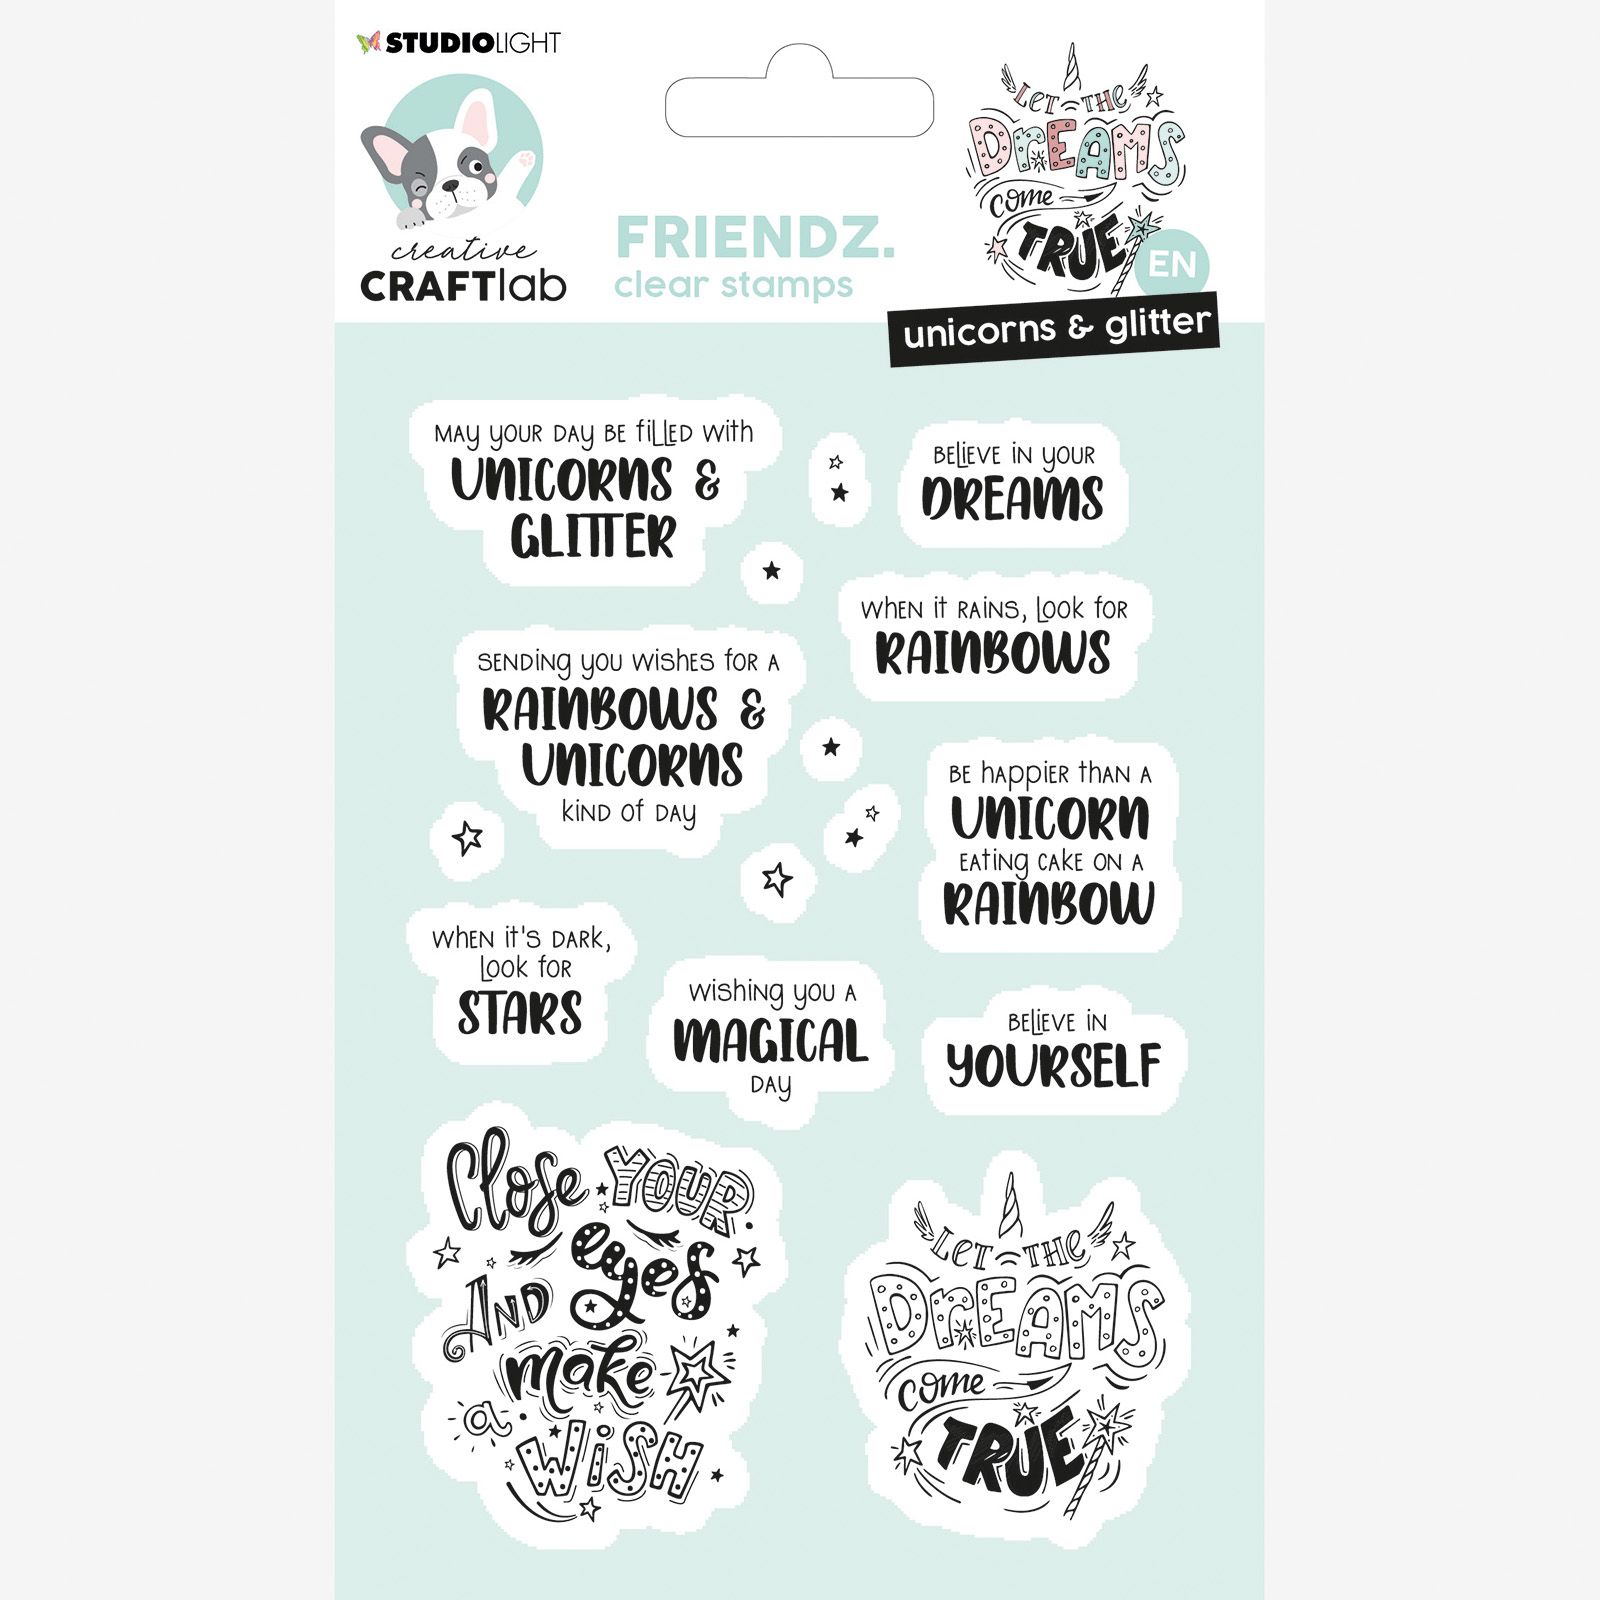 Creative Craftlab • Friendz Clear Stempel Unicorns & Glitter